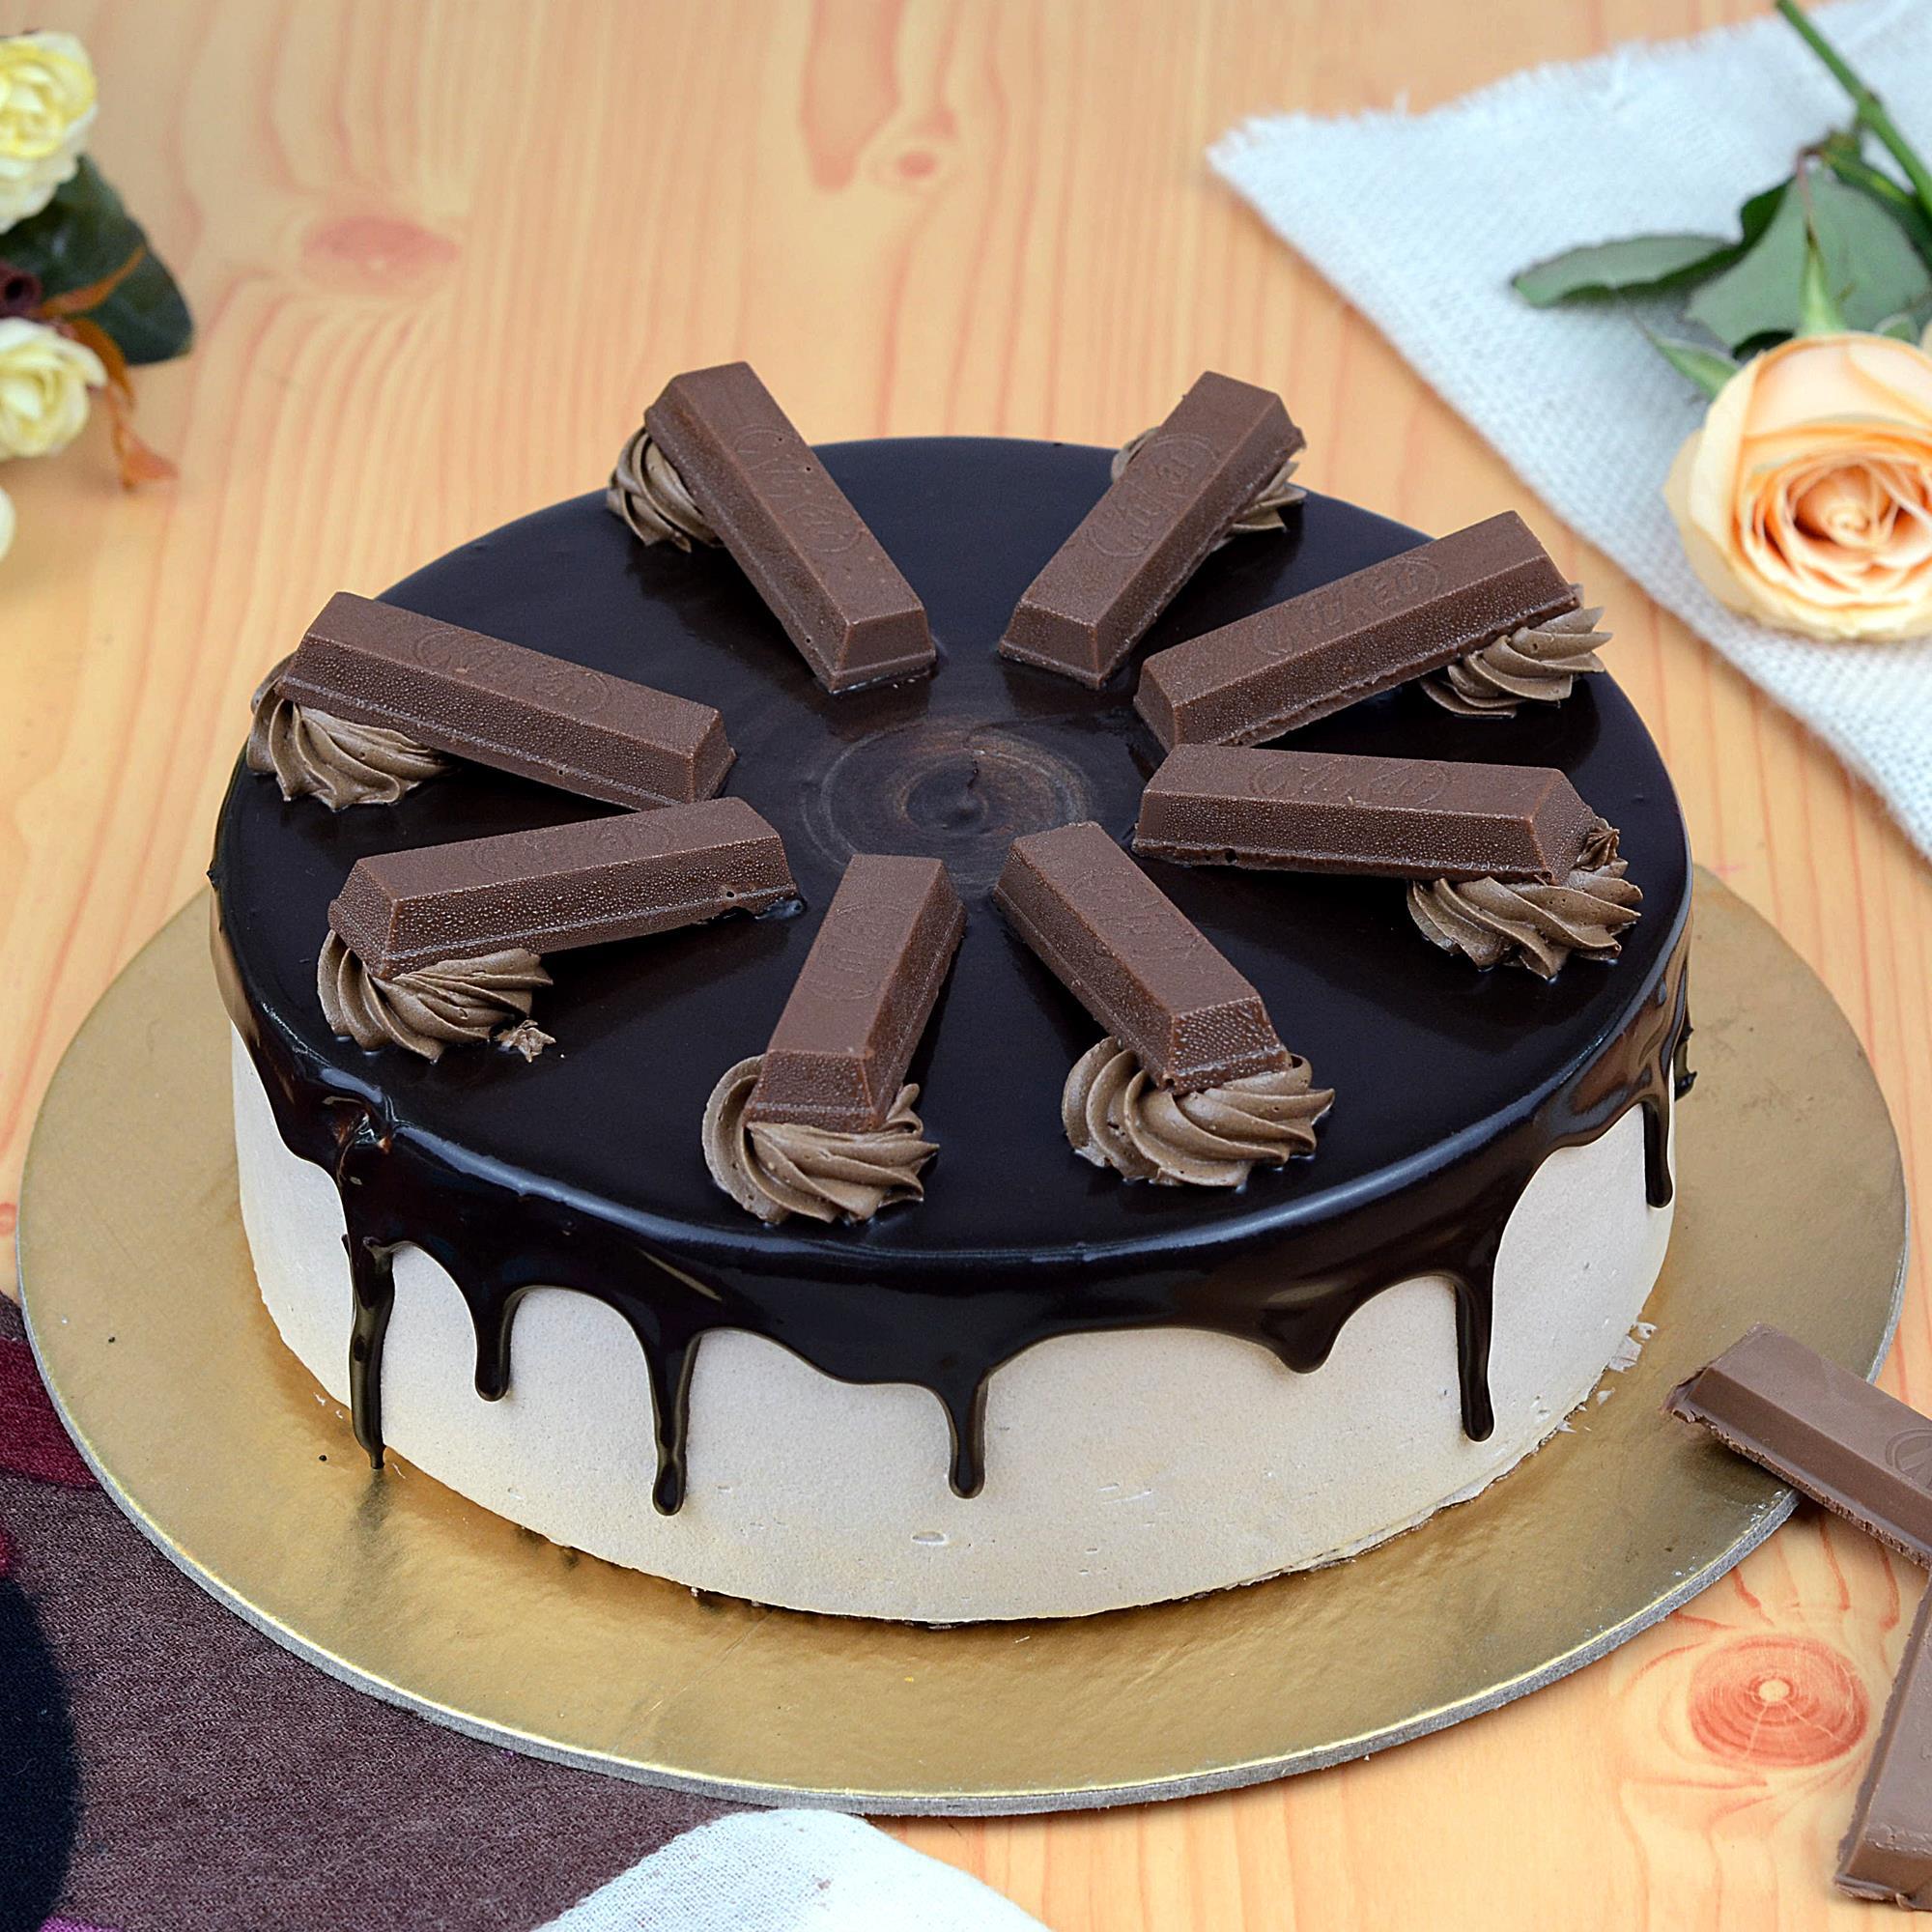 Kit-Kat Gems Chocolate Cake online cake delivery., 24x7 Home delivery of  Cake in BANGALORE VISHWAVIDYALAYA, Banglore